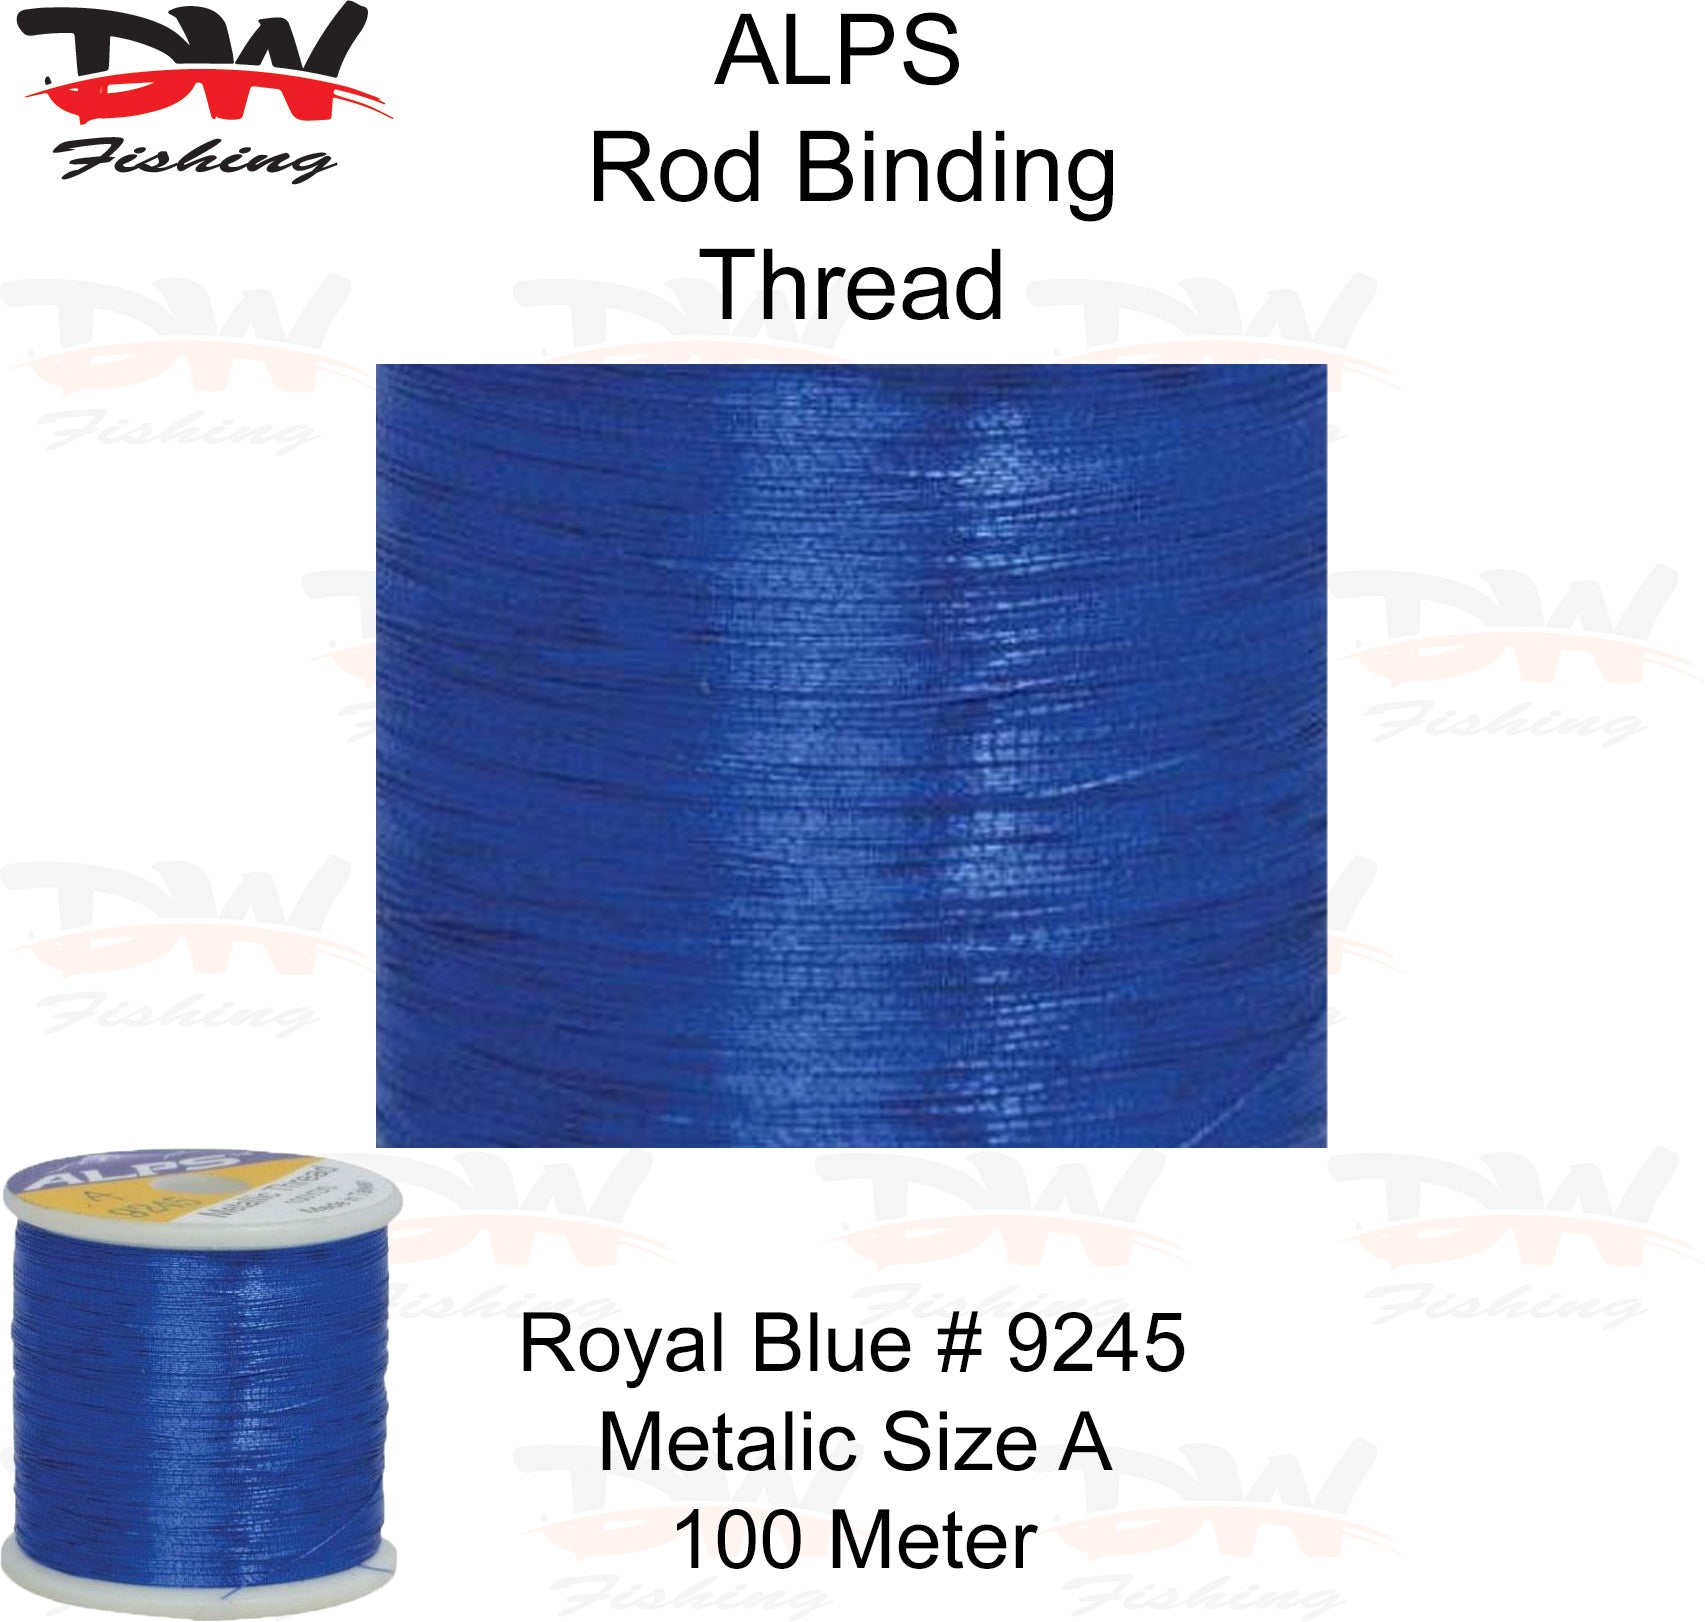 ALPS metalic rod binding thread royal blue